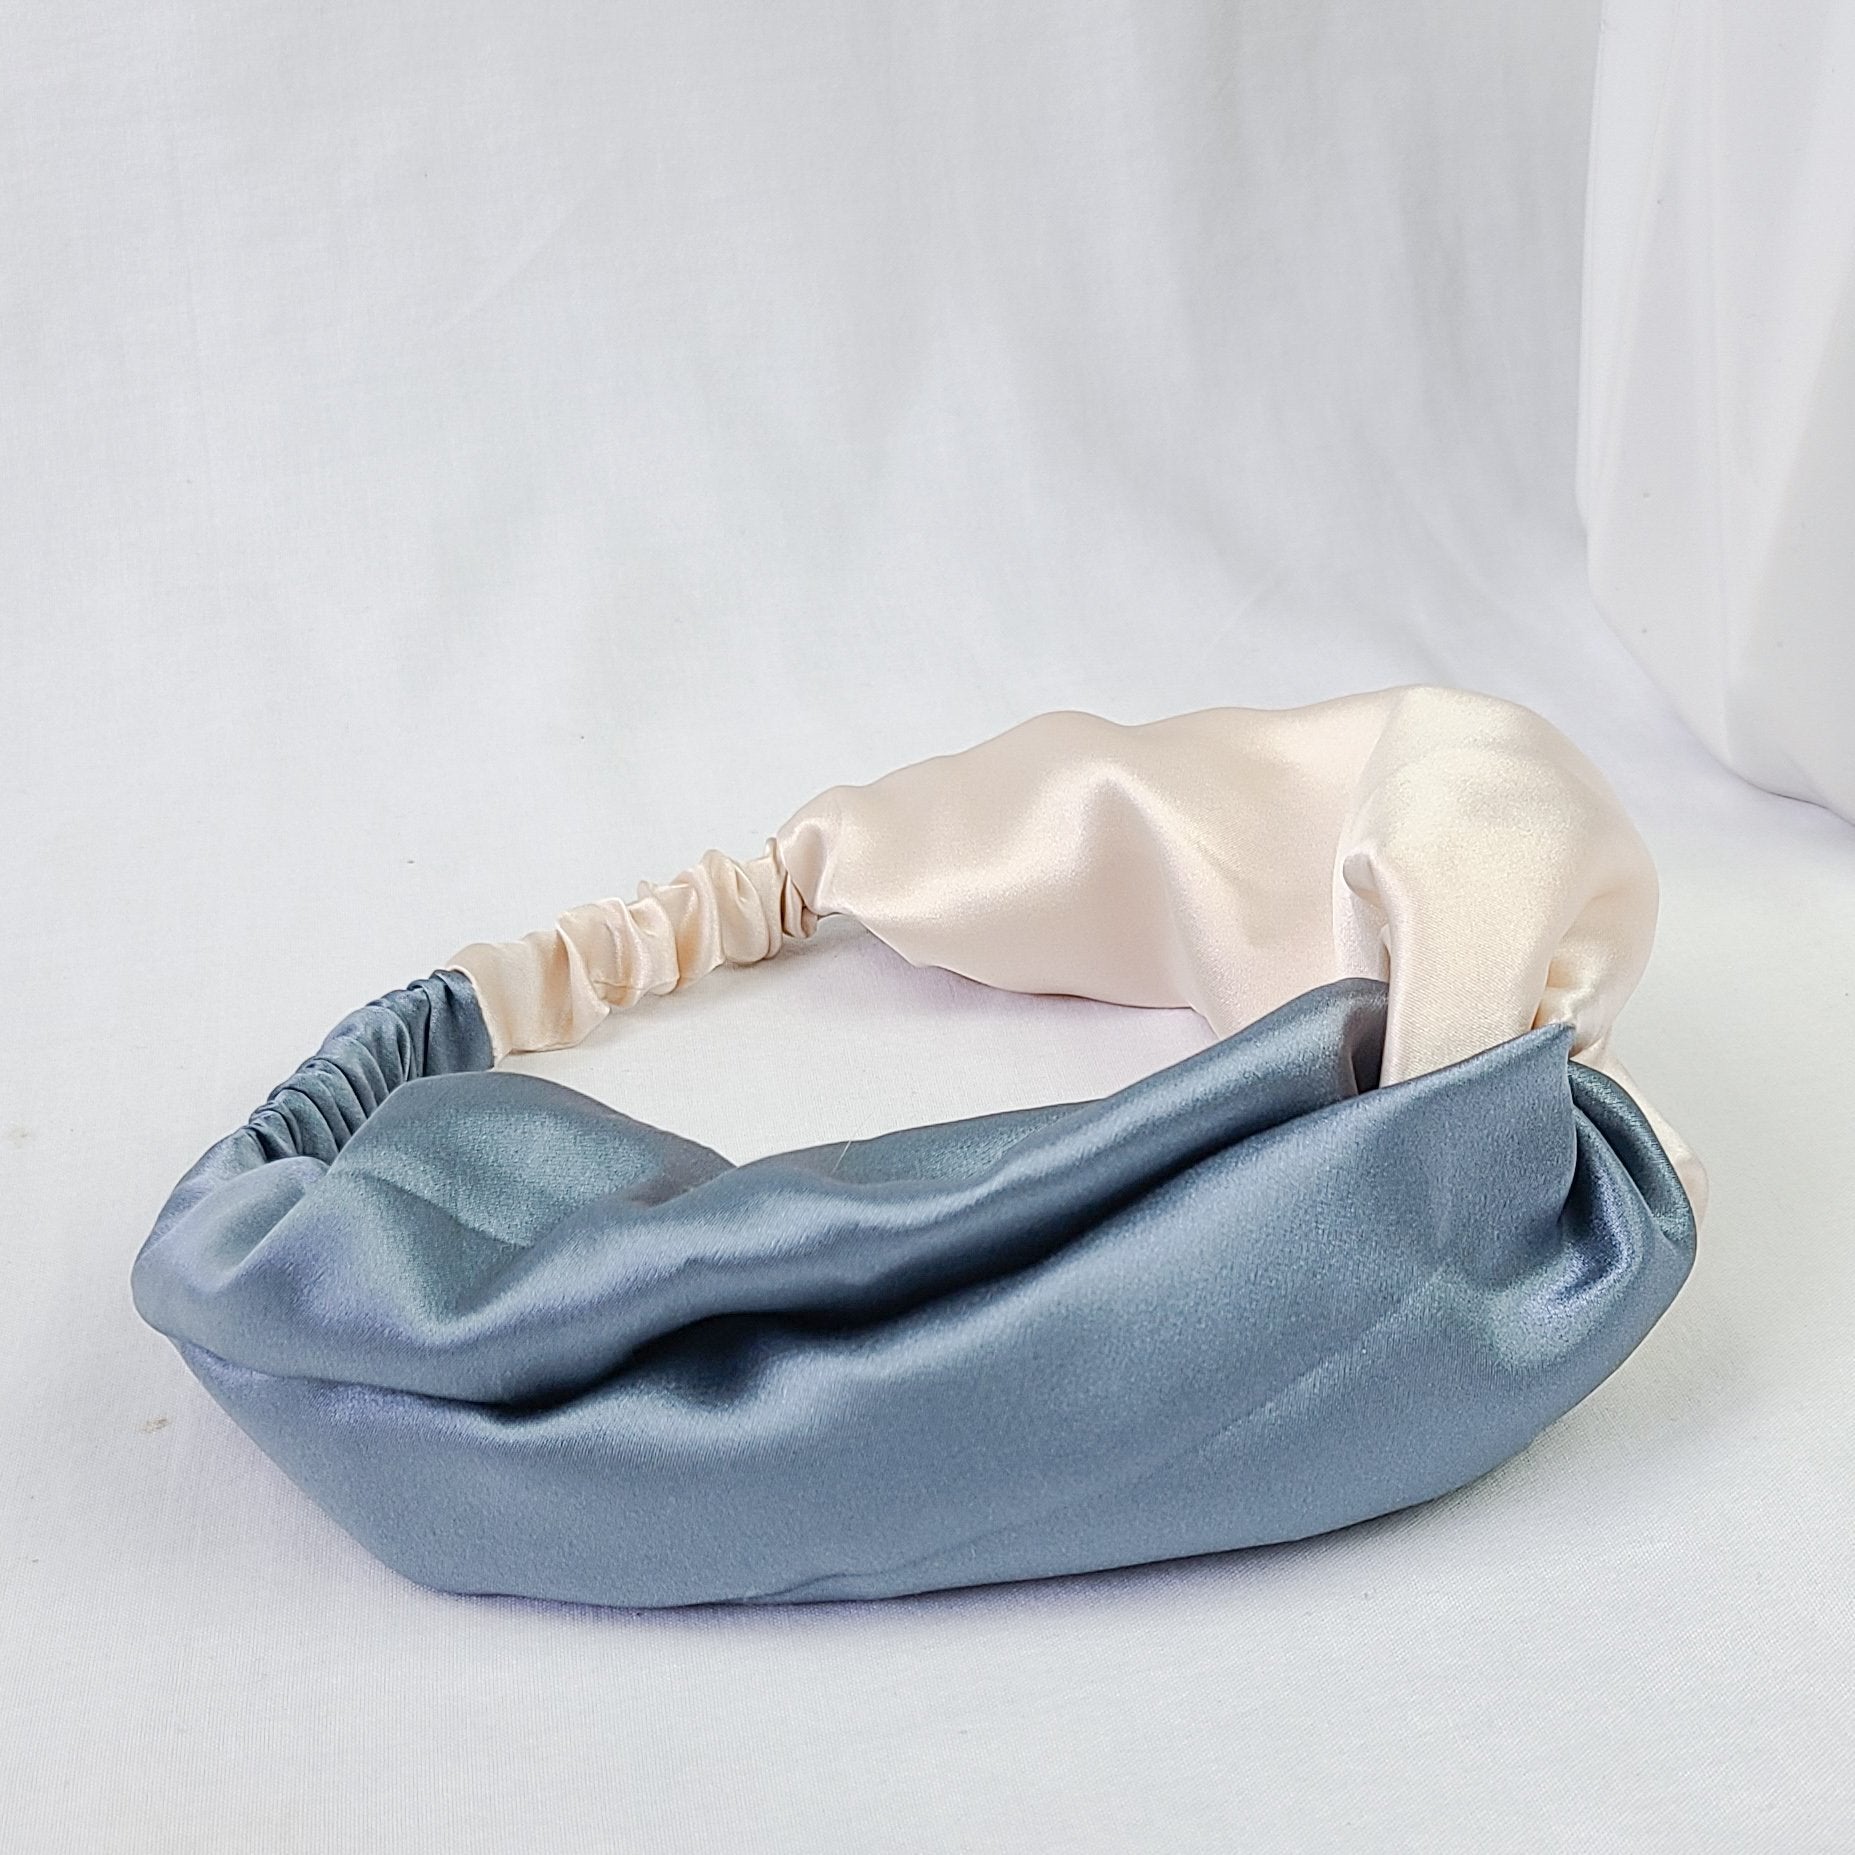 Silk knot headband - 2 tone - ivory and Blue -R Belliard